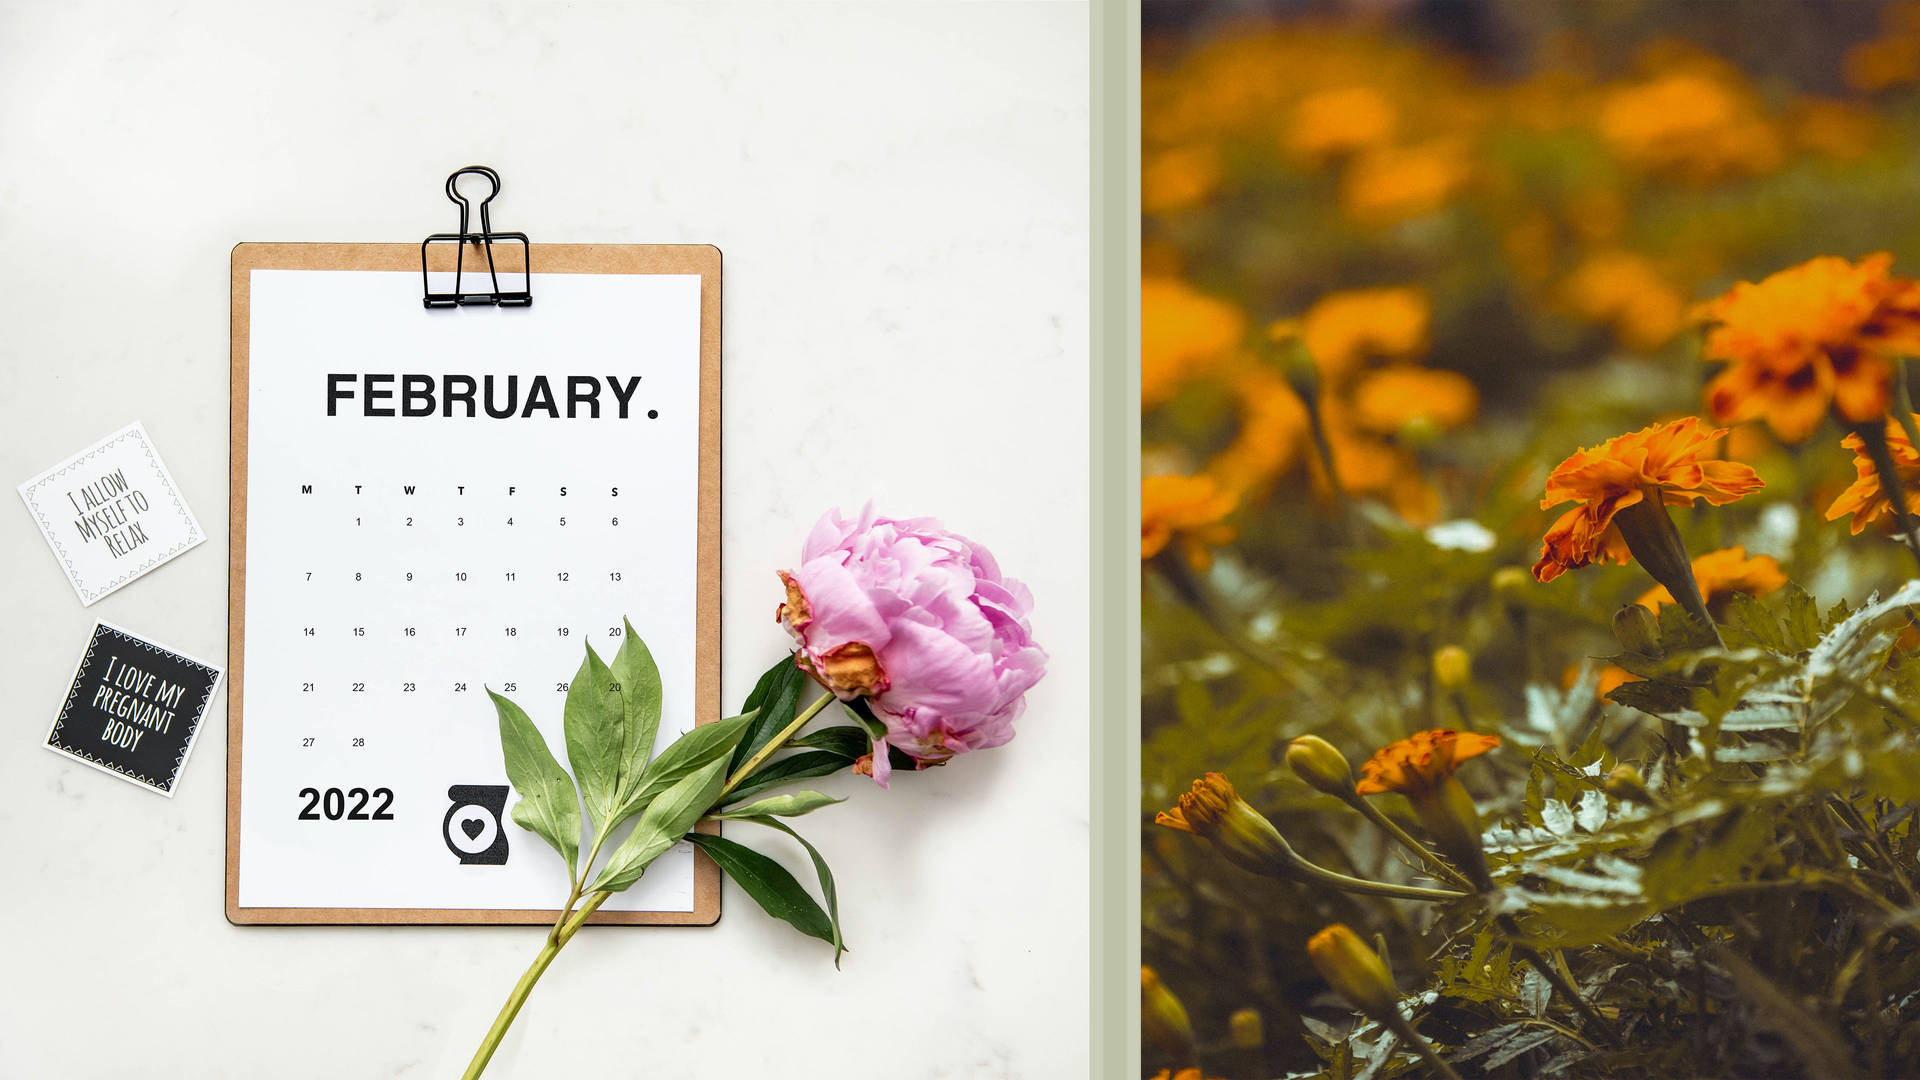 February 2022 Marigold Flower Calendar Background